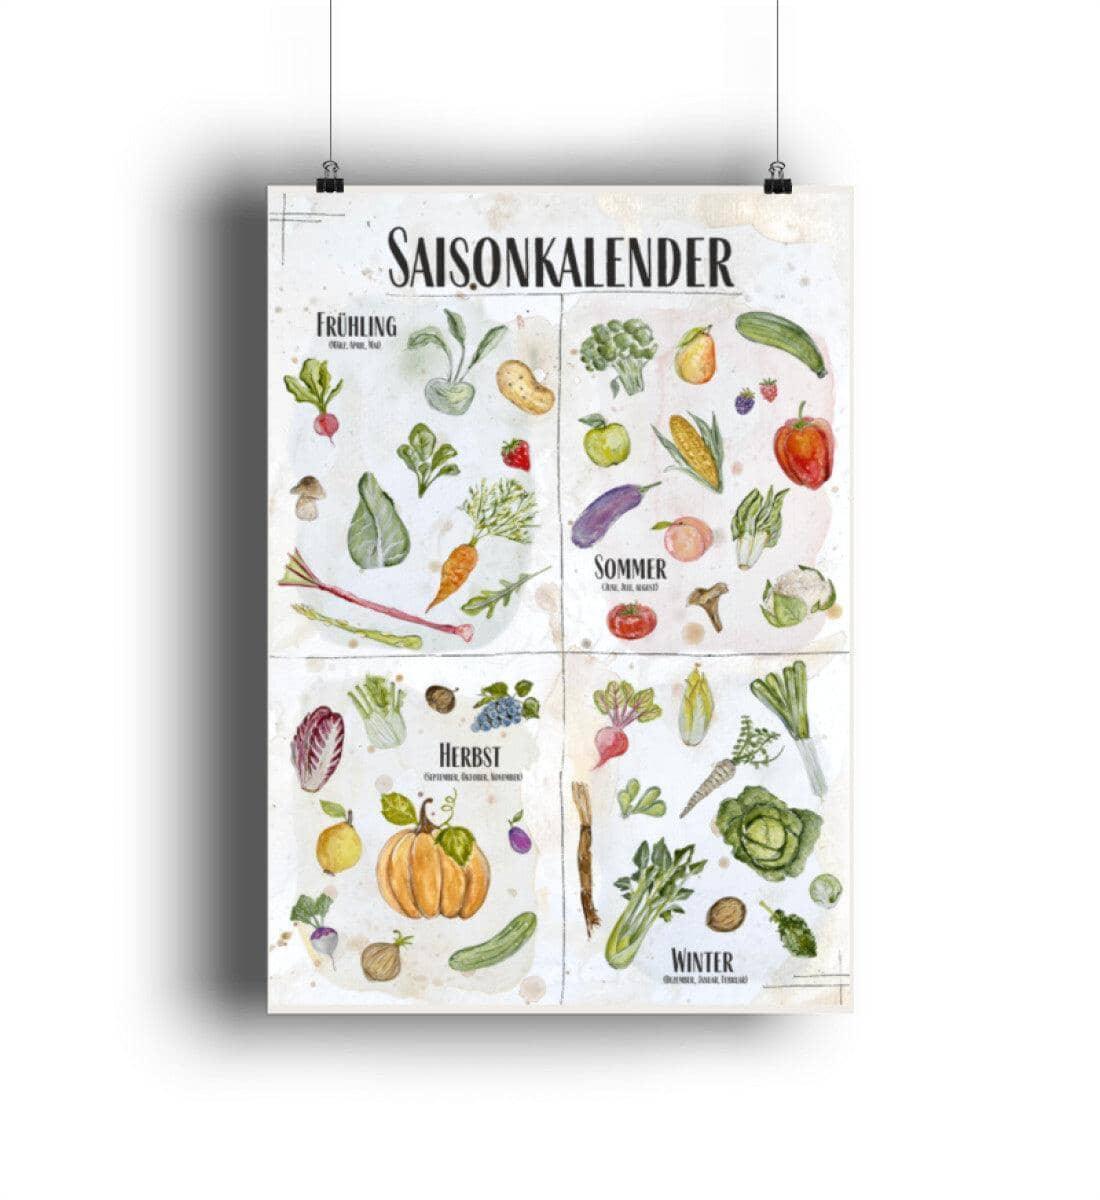 Saisonkalender [Svenja Rakel] - Poster - Team Vegan © vegan t shirt